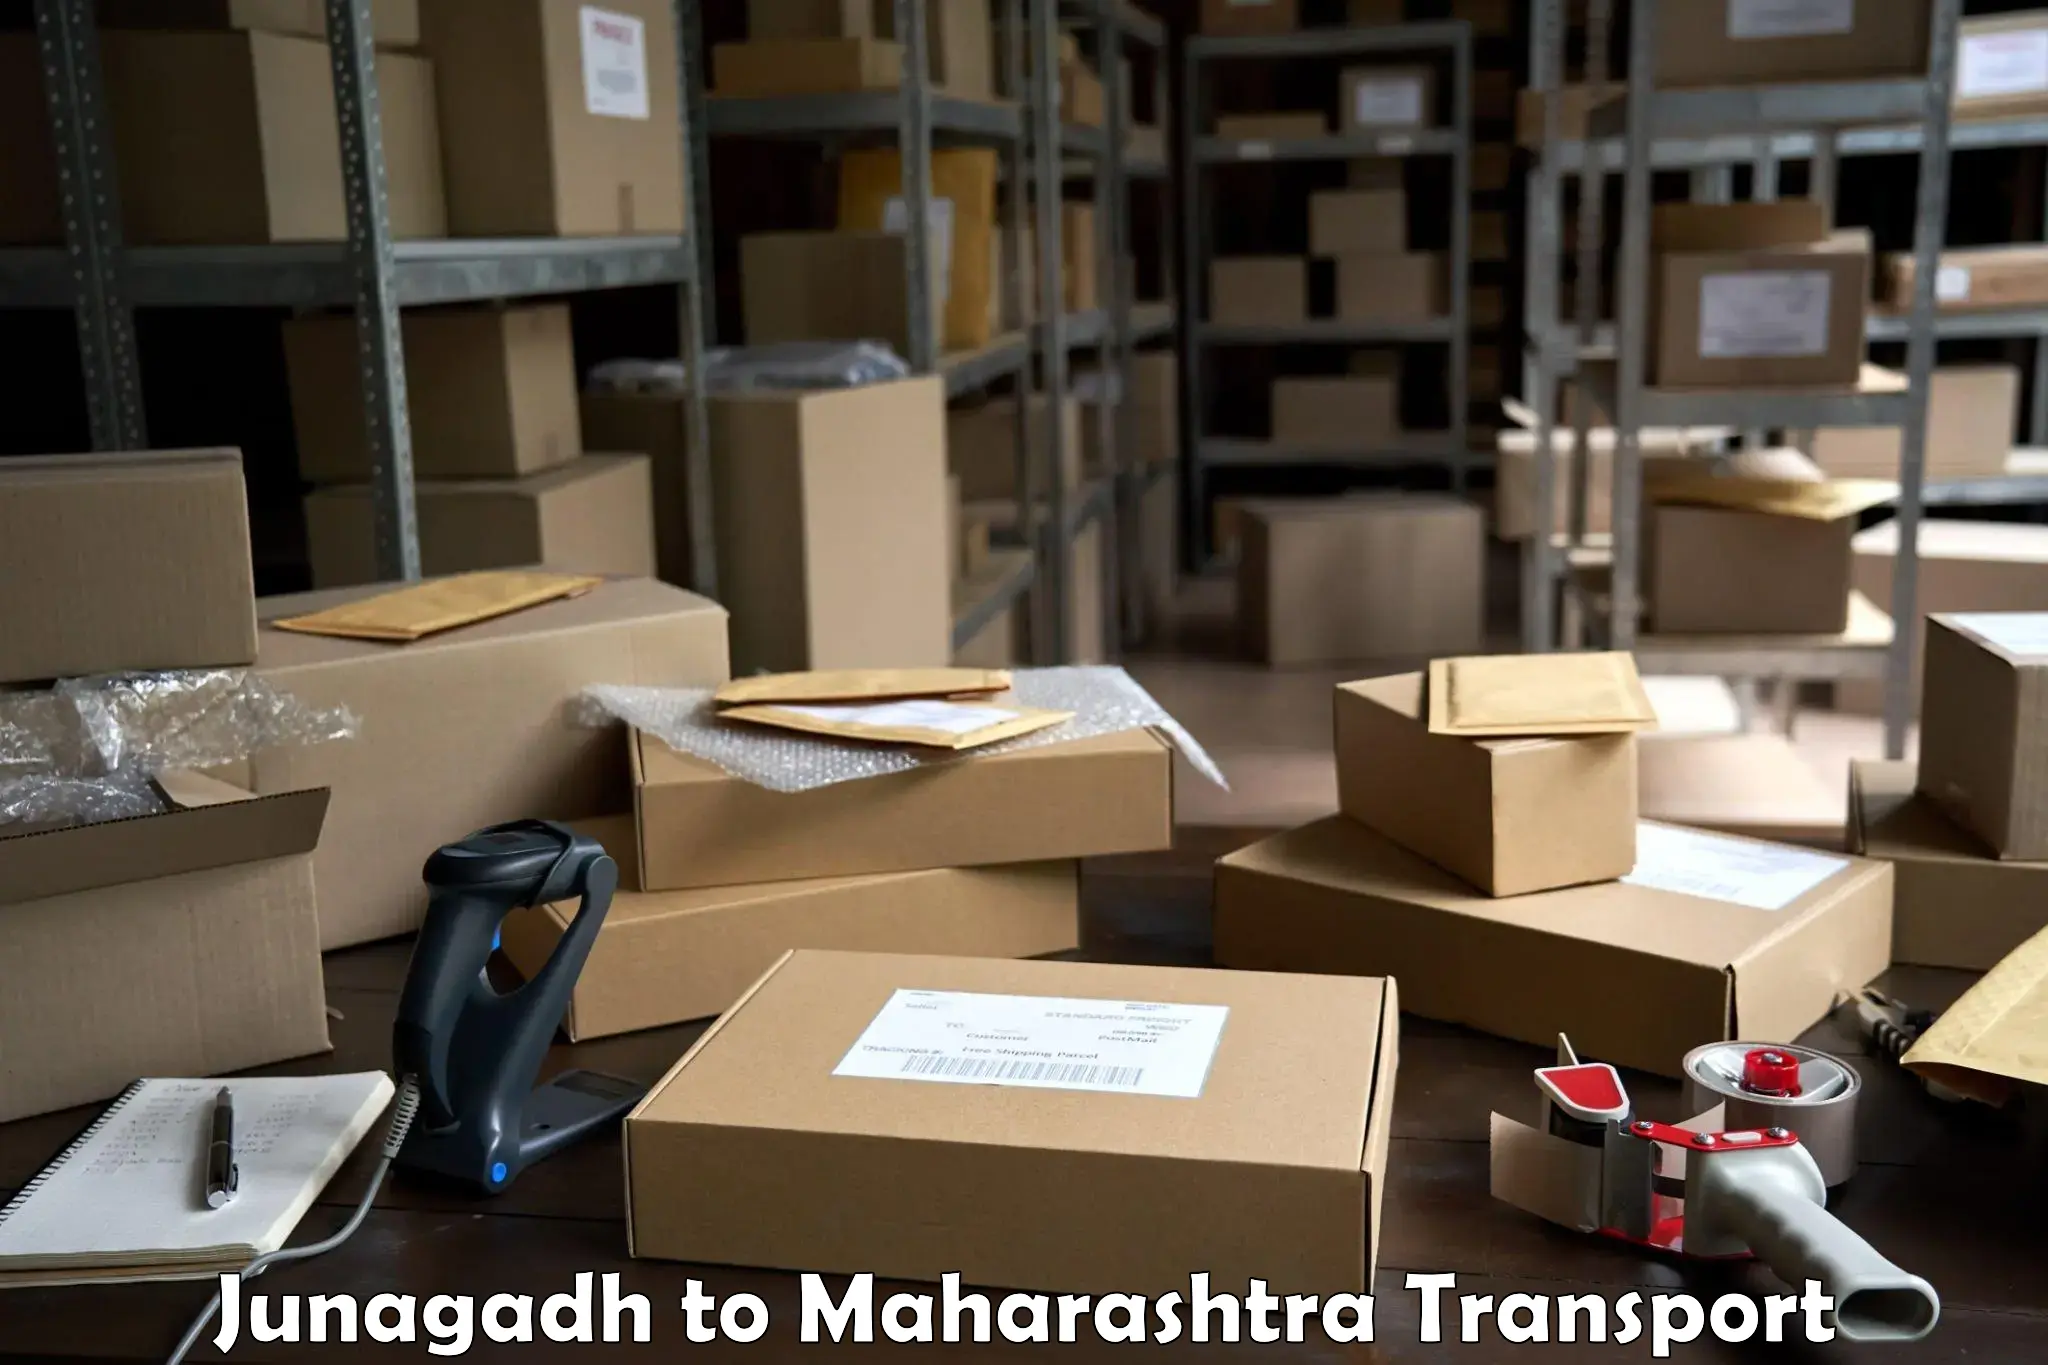 Sending bike to another city Junagadh to Maharashtra